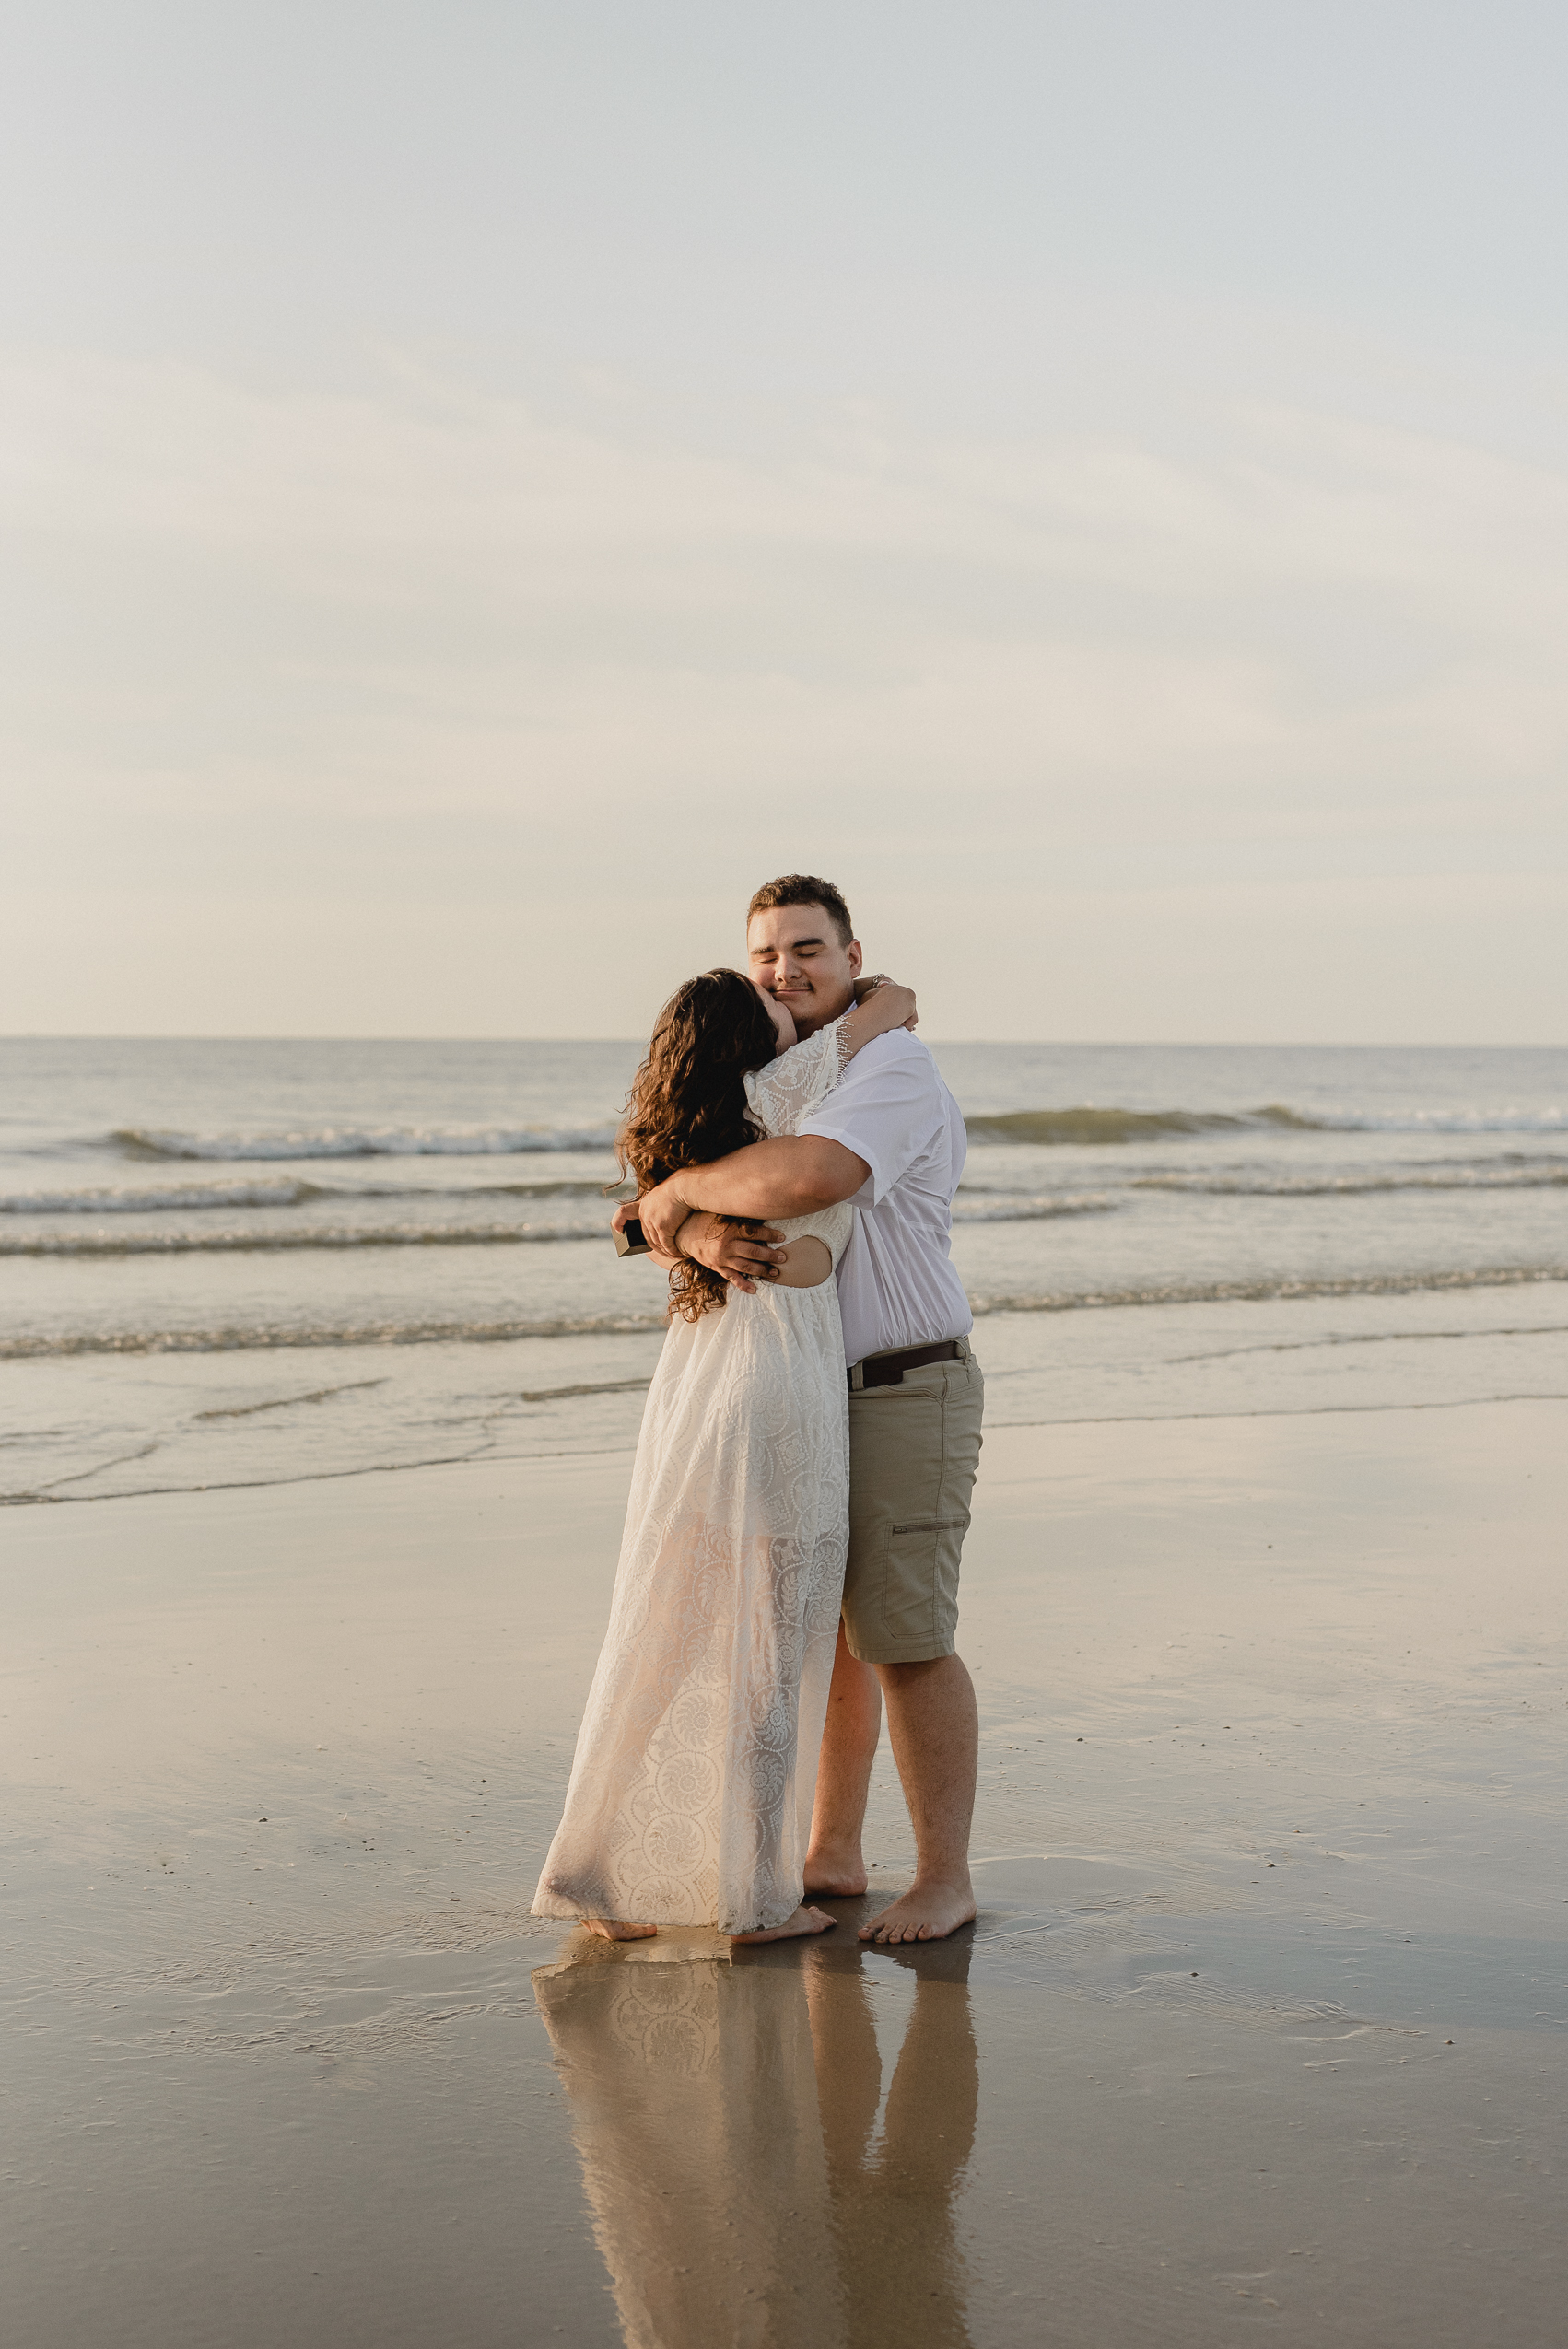 Jetty Park Beach Port Cape Canaveral Orlando Destination Elopement Wedding Couples Photographer